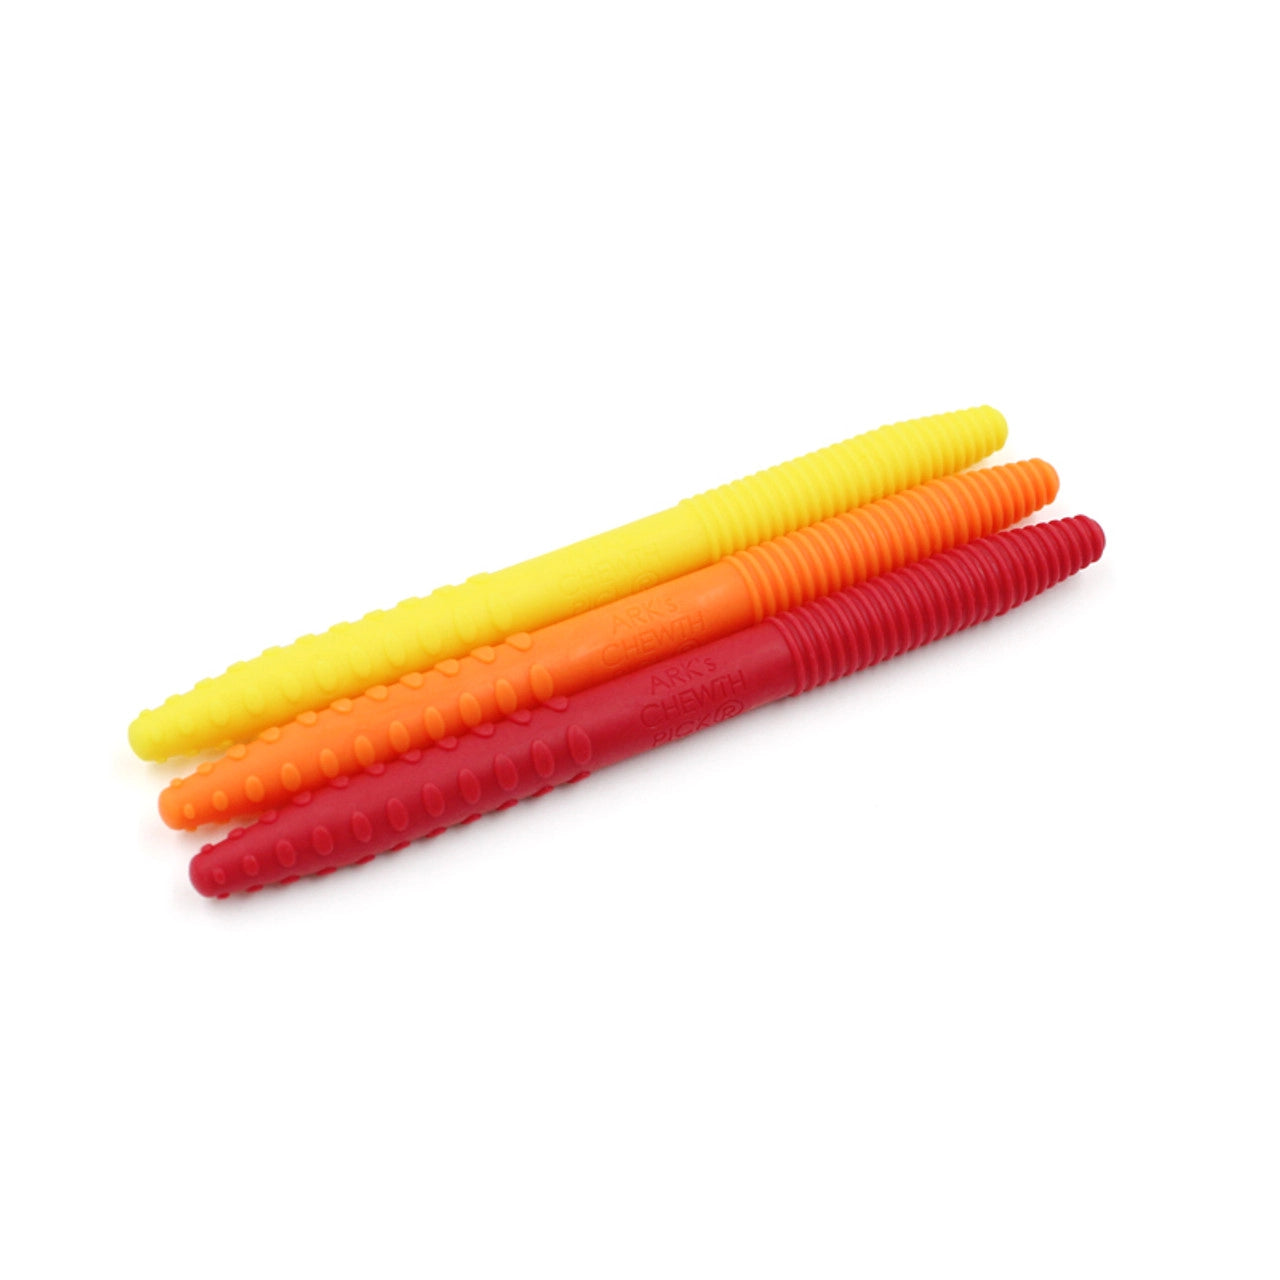 ARK's_TEXTURED_Chewth_Pick_Chewable_'toothpicks'_Pack_of_three_red_orange_yellow